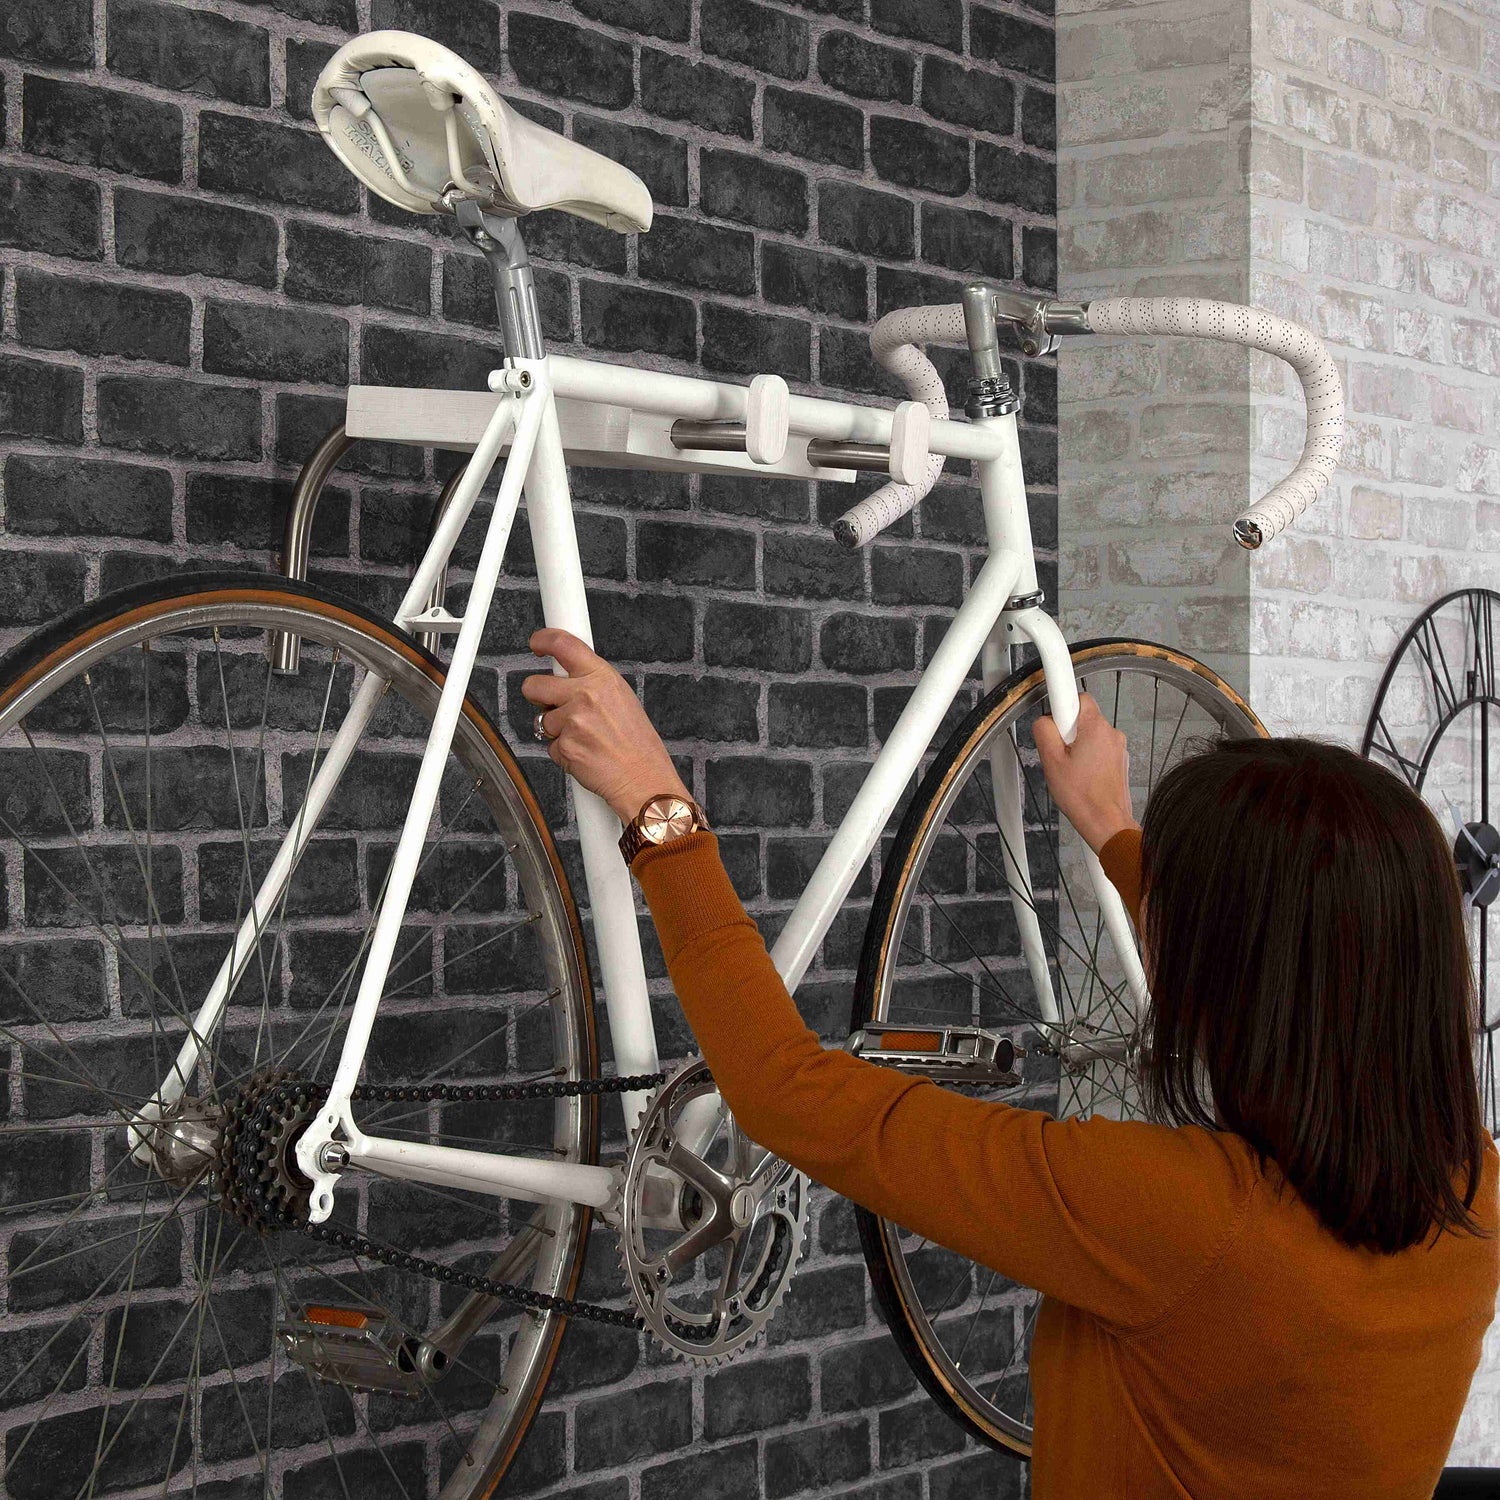 Wall Mounted Bike Rack, Bicycle Storage, Wooden Bike Hook // OAK WOOD 